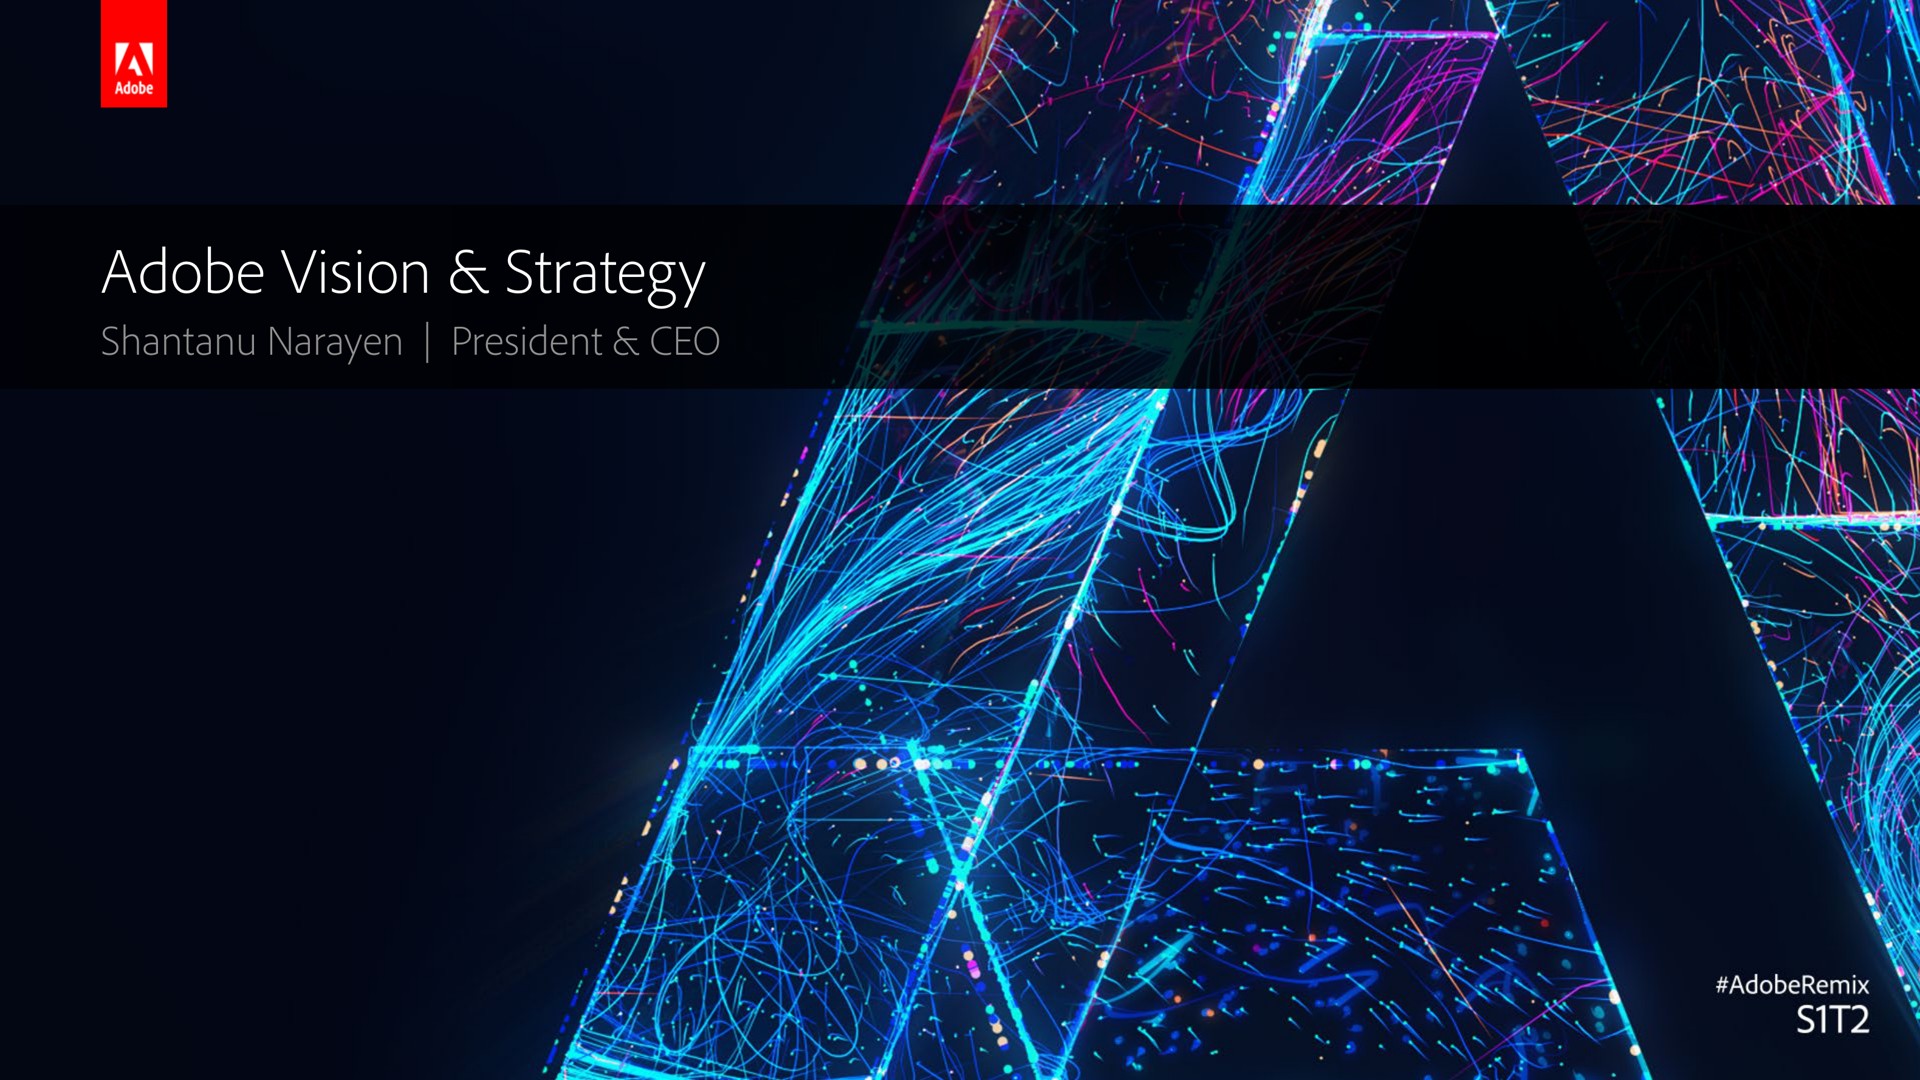 adobe vision strategy | Adobe